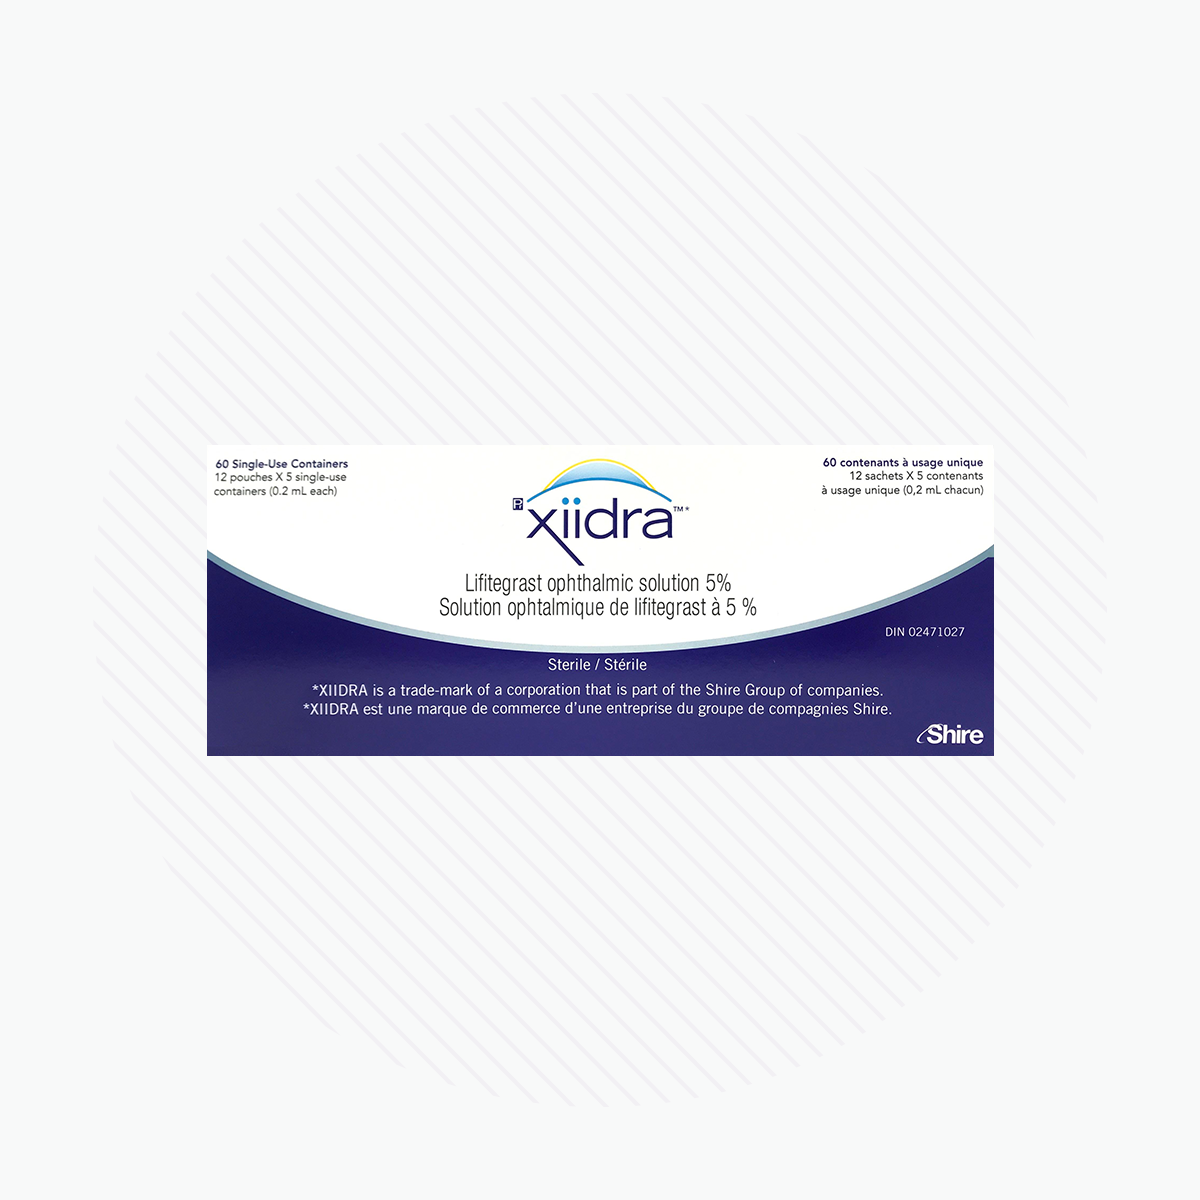 Xiidra® (lifitegrast ophthalmic solution) 5%